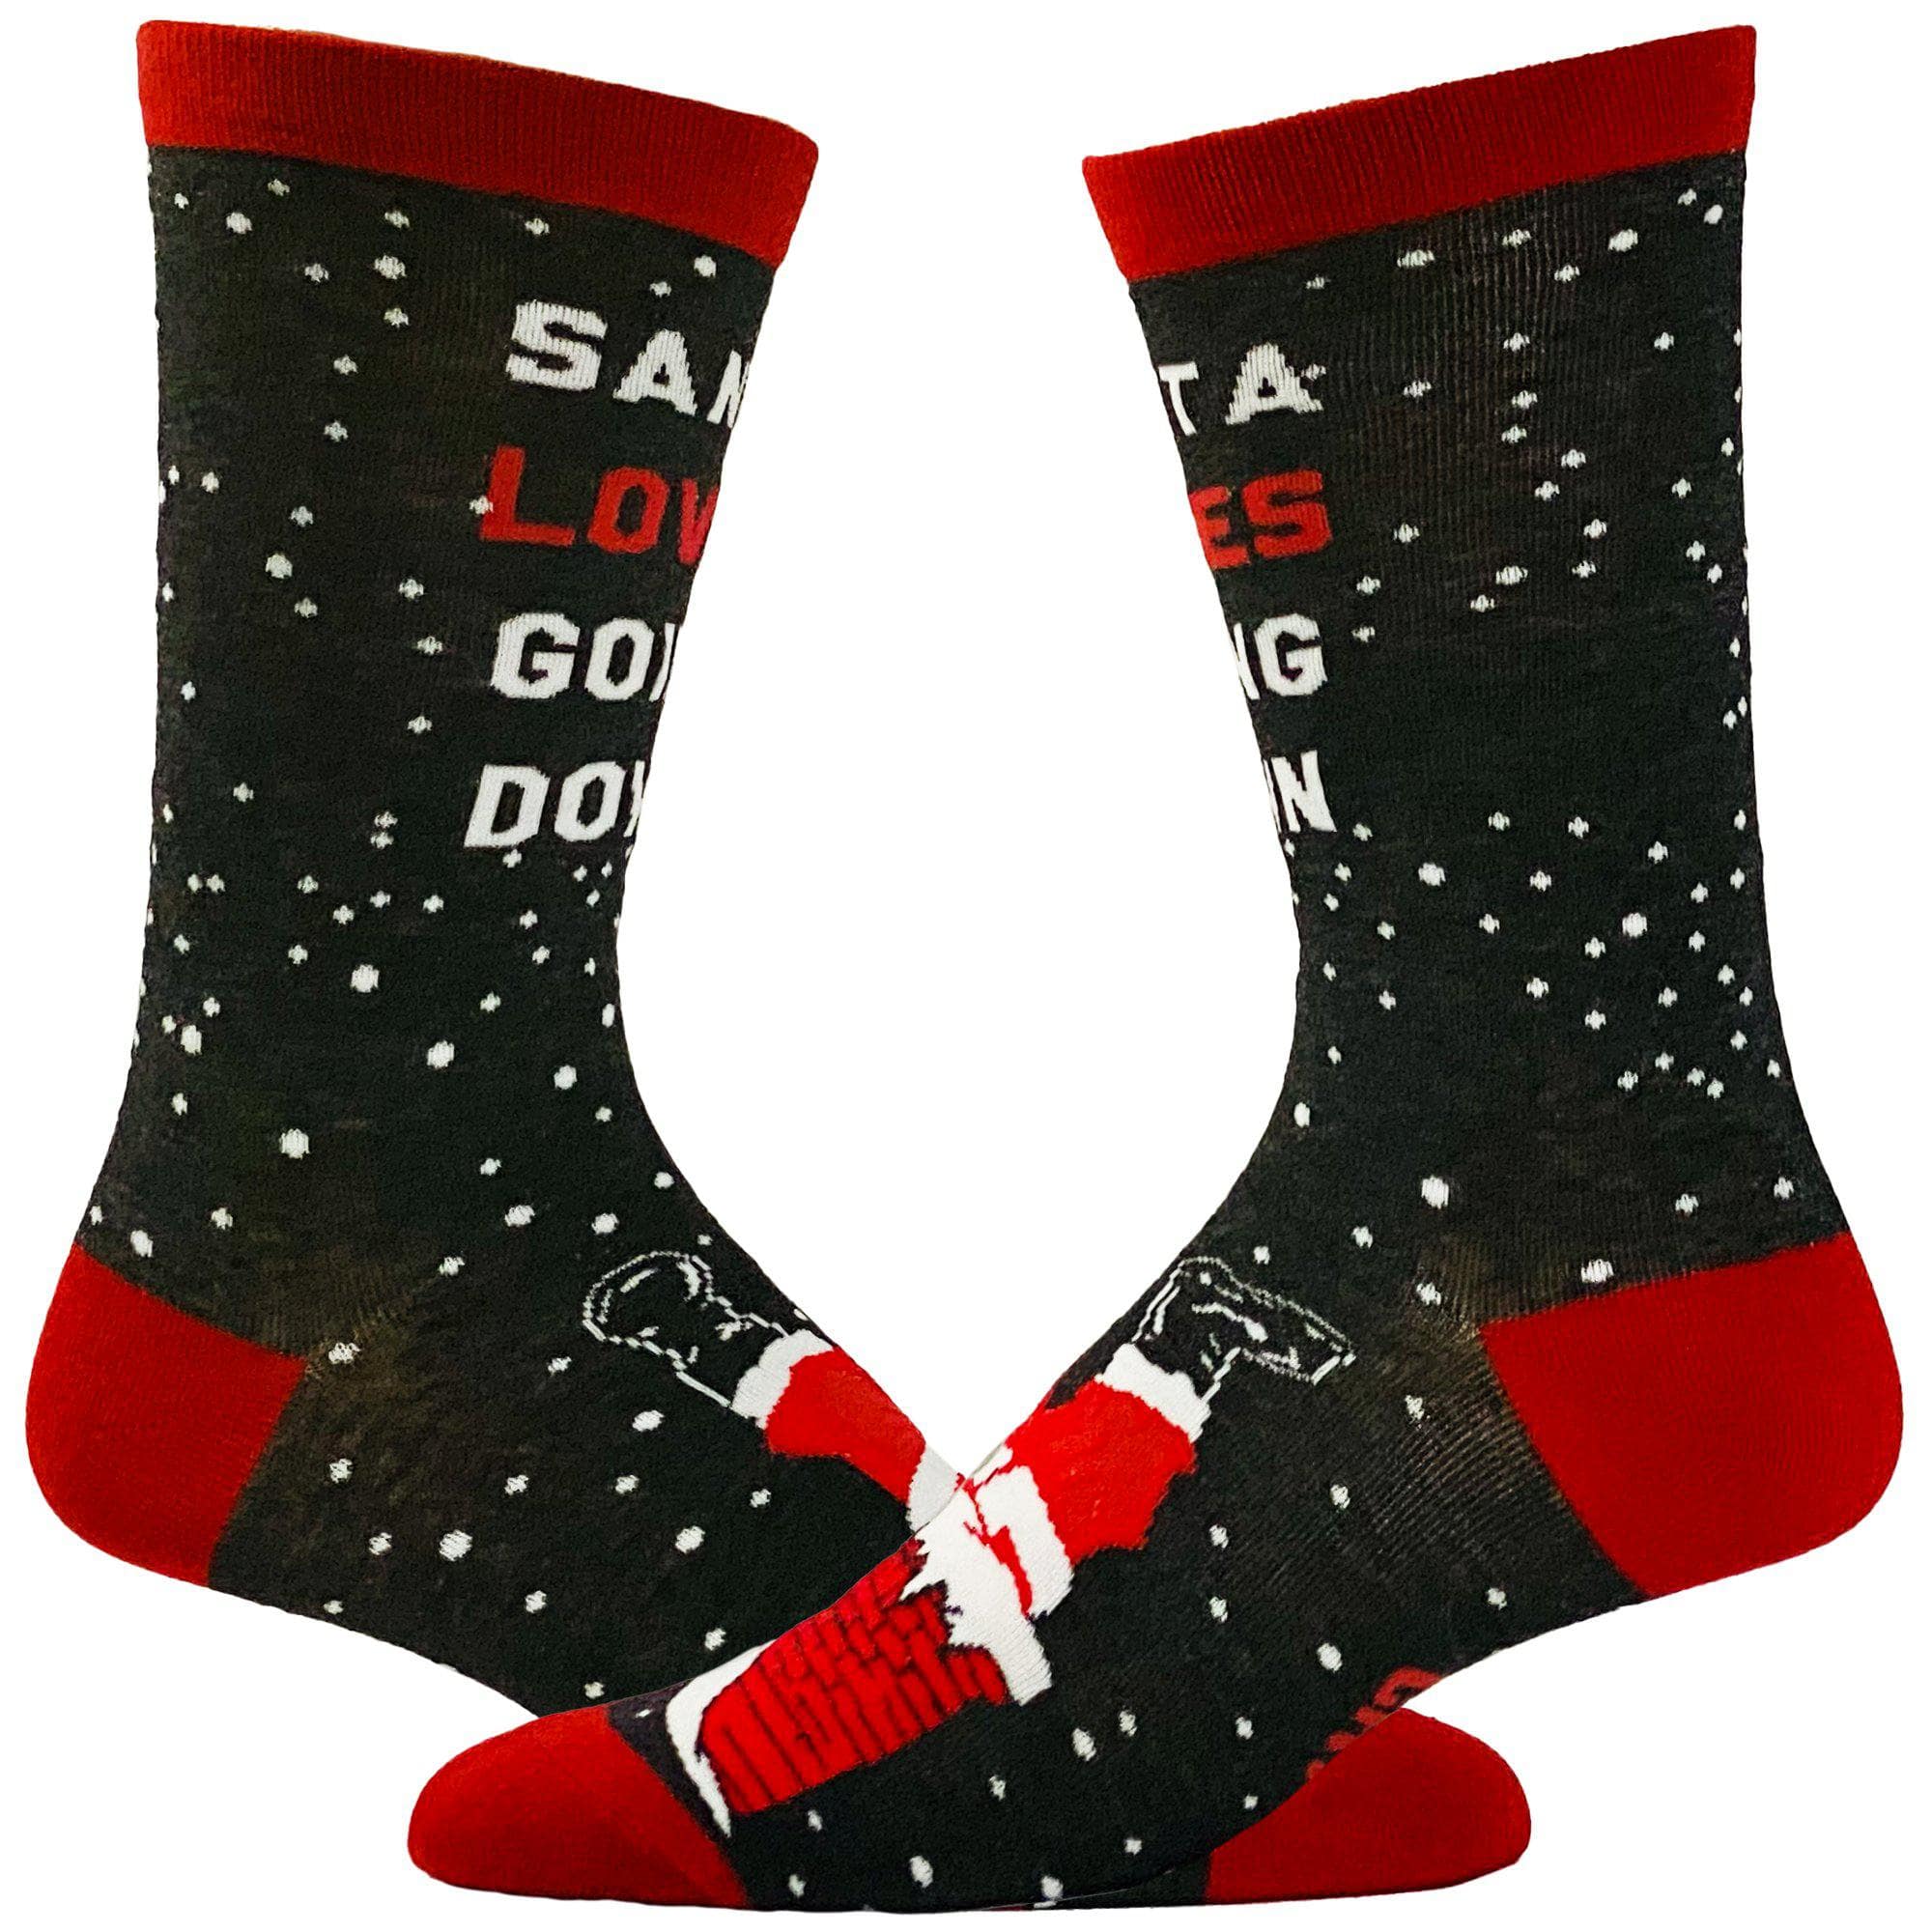 Men's Santa Loves Going Down Socks - Crazy Dog T-Shirts